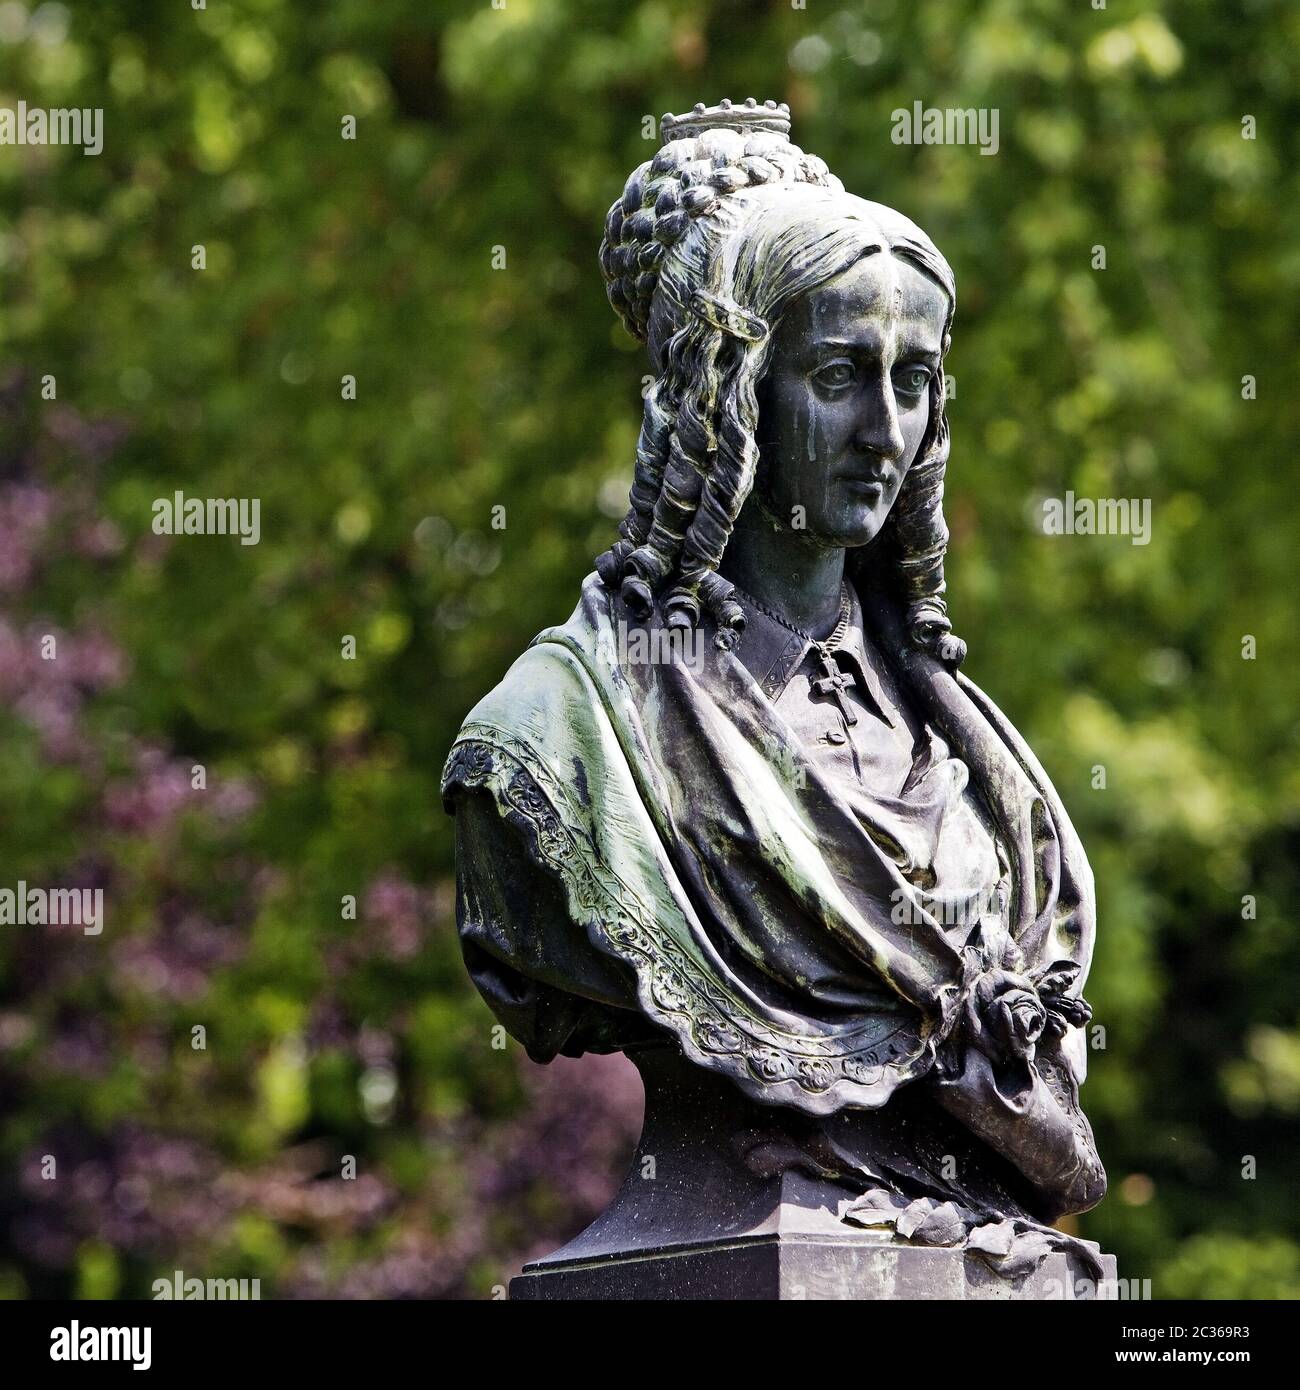 Bust of Annette von Droste-Hülshoff, Burg Hülshoff Castle, Havixbeck, Germany, Europe Stock Photo